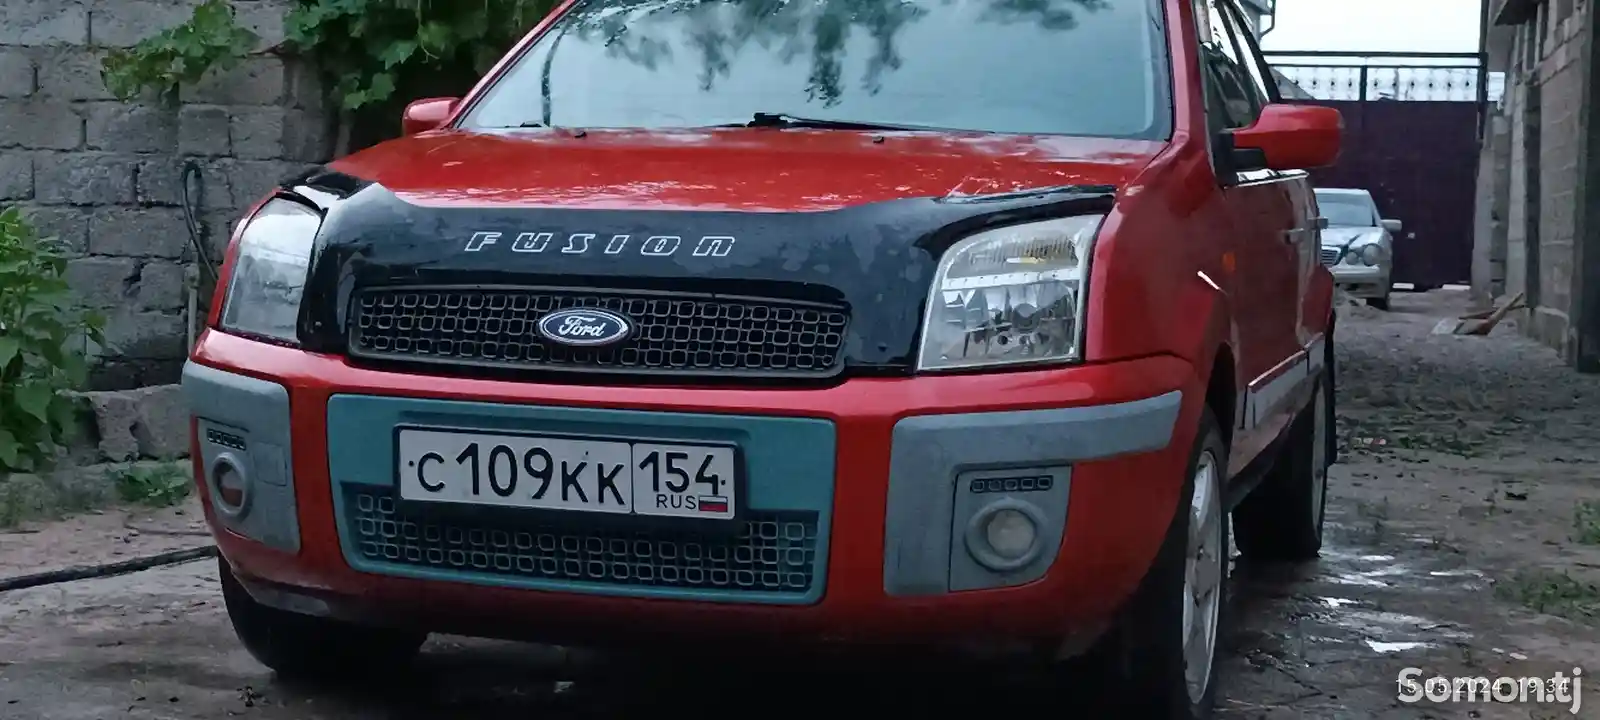 Ford Fiesta, 2006-2